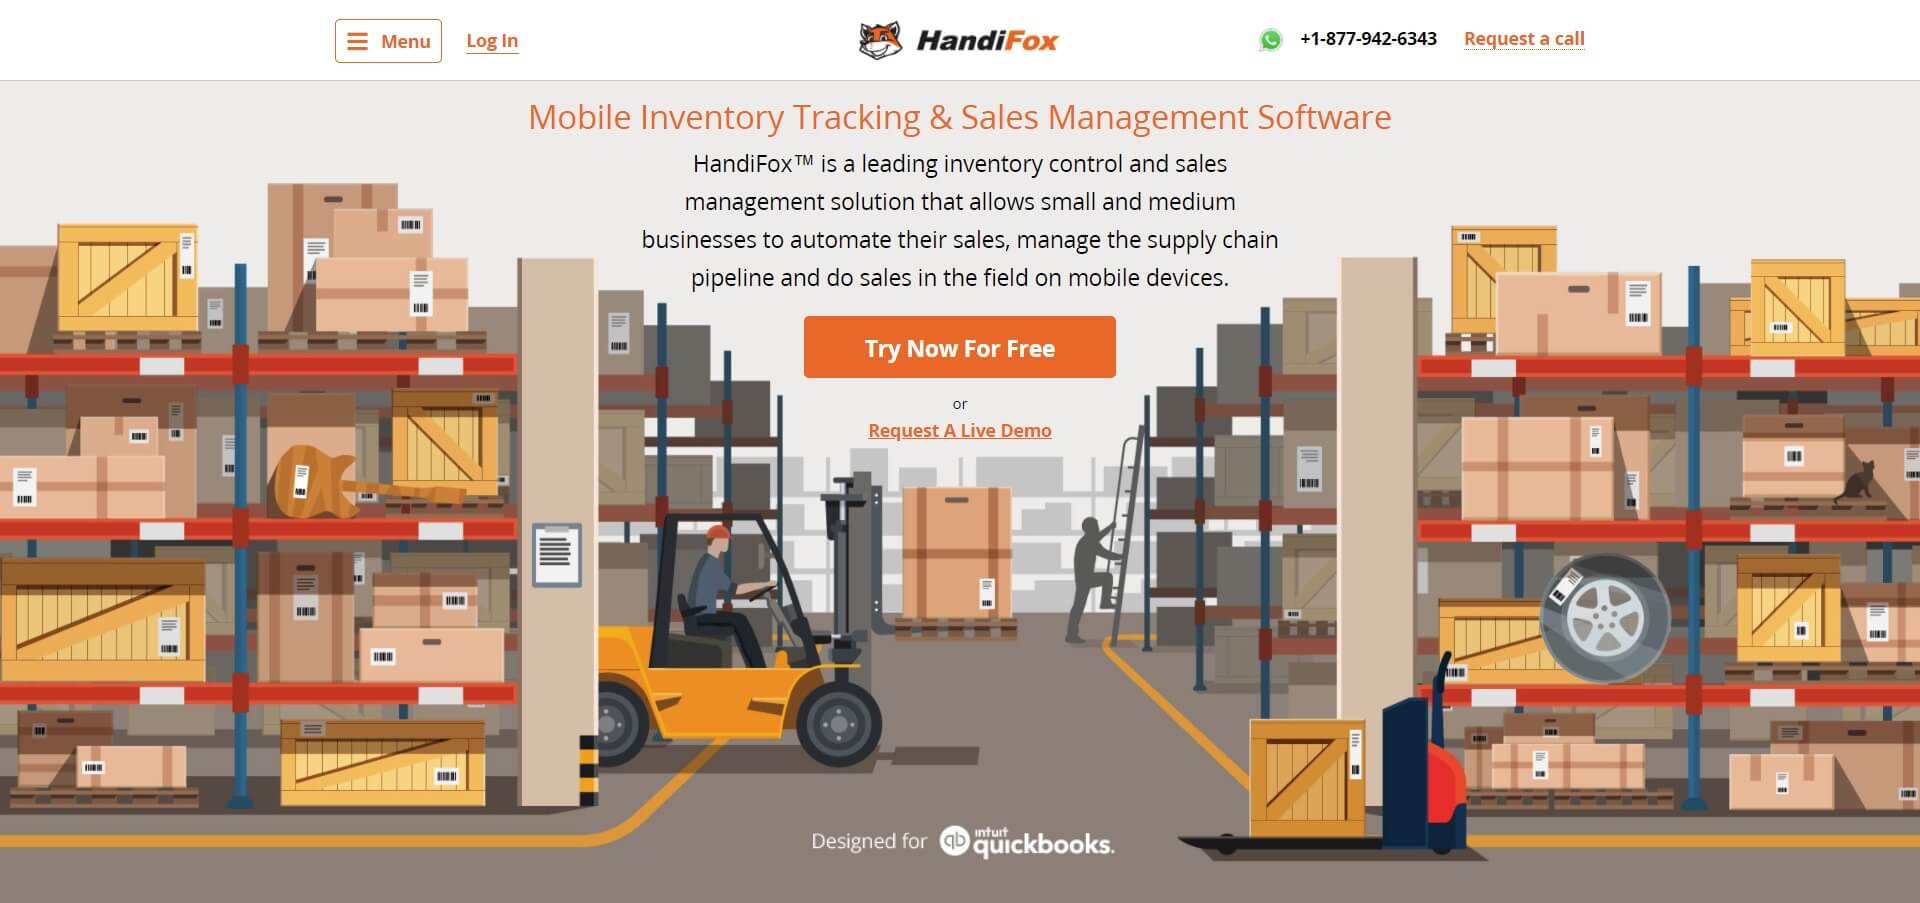 handifox inventory management software